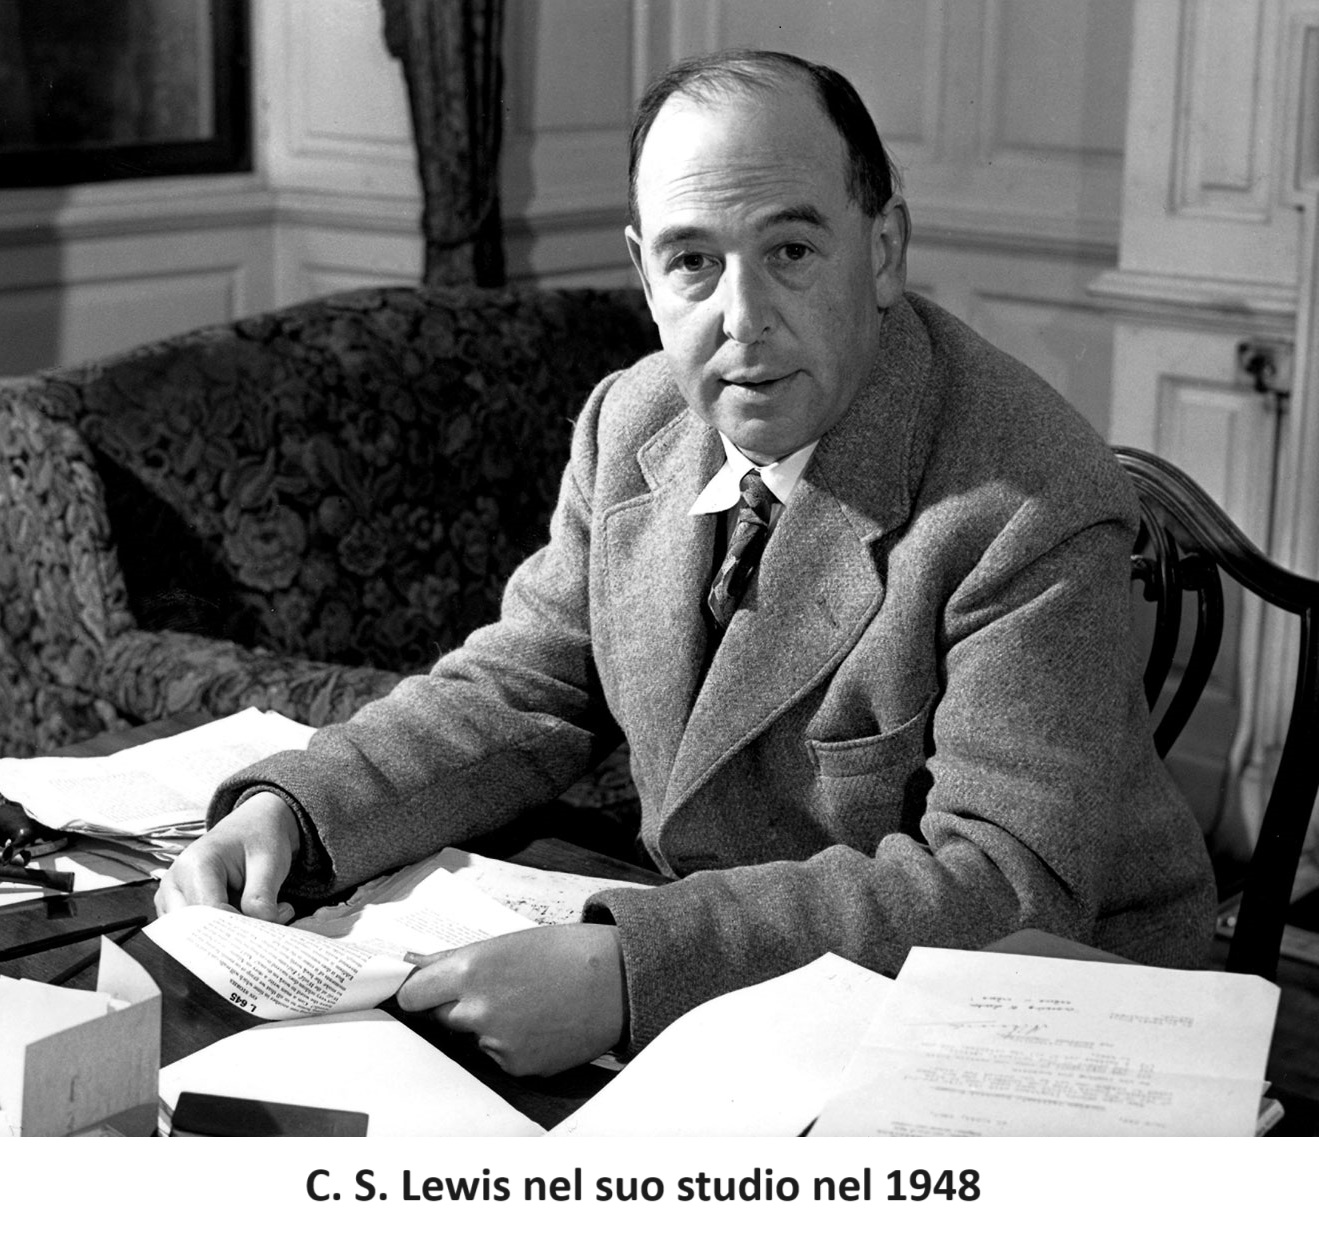 C. S. Lewis nel suo studio nel 1948